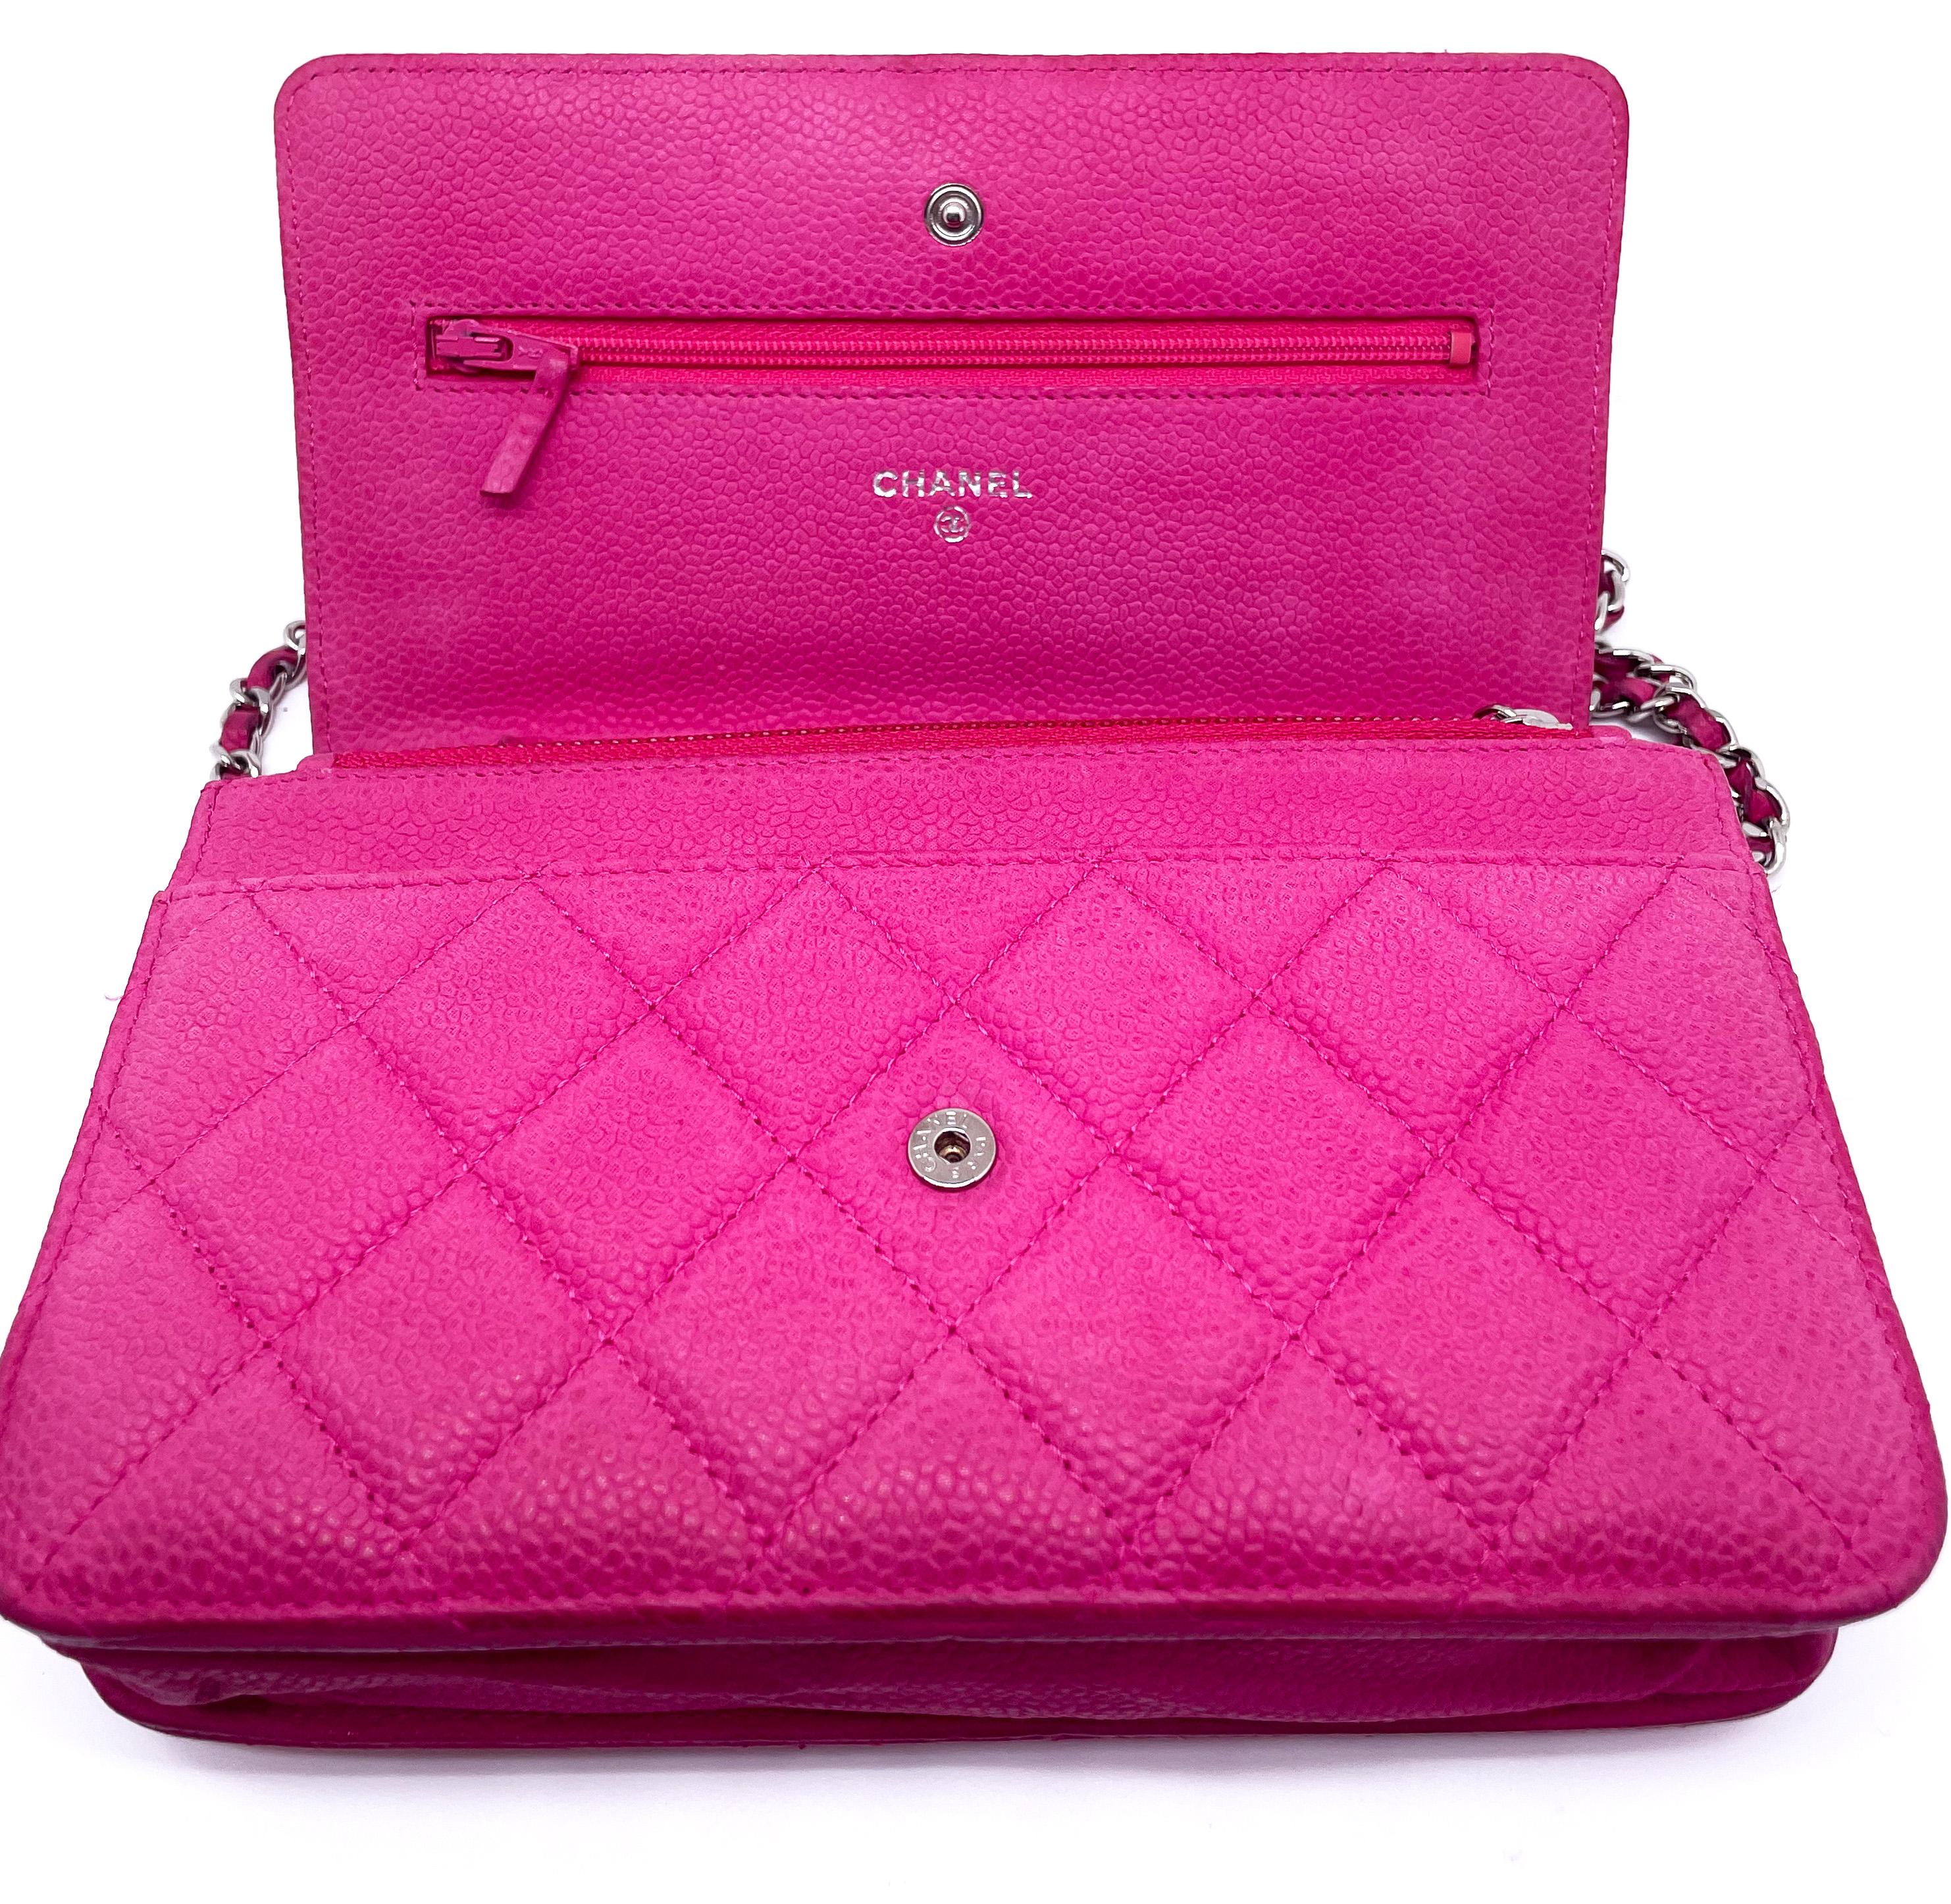 Chanel Wallet on Chain Handbag Pink Caviar Leather 6